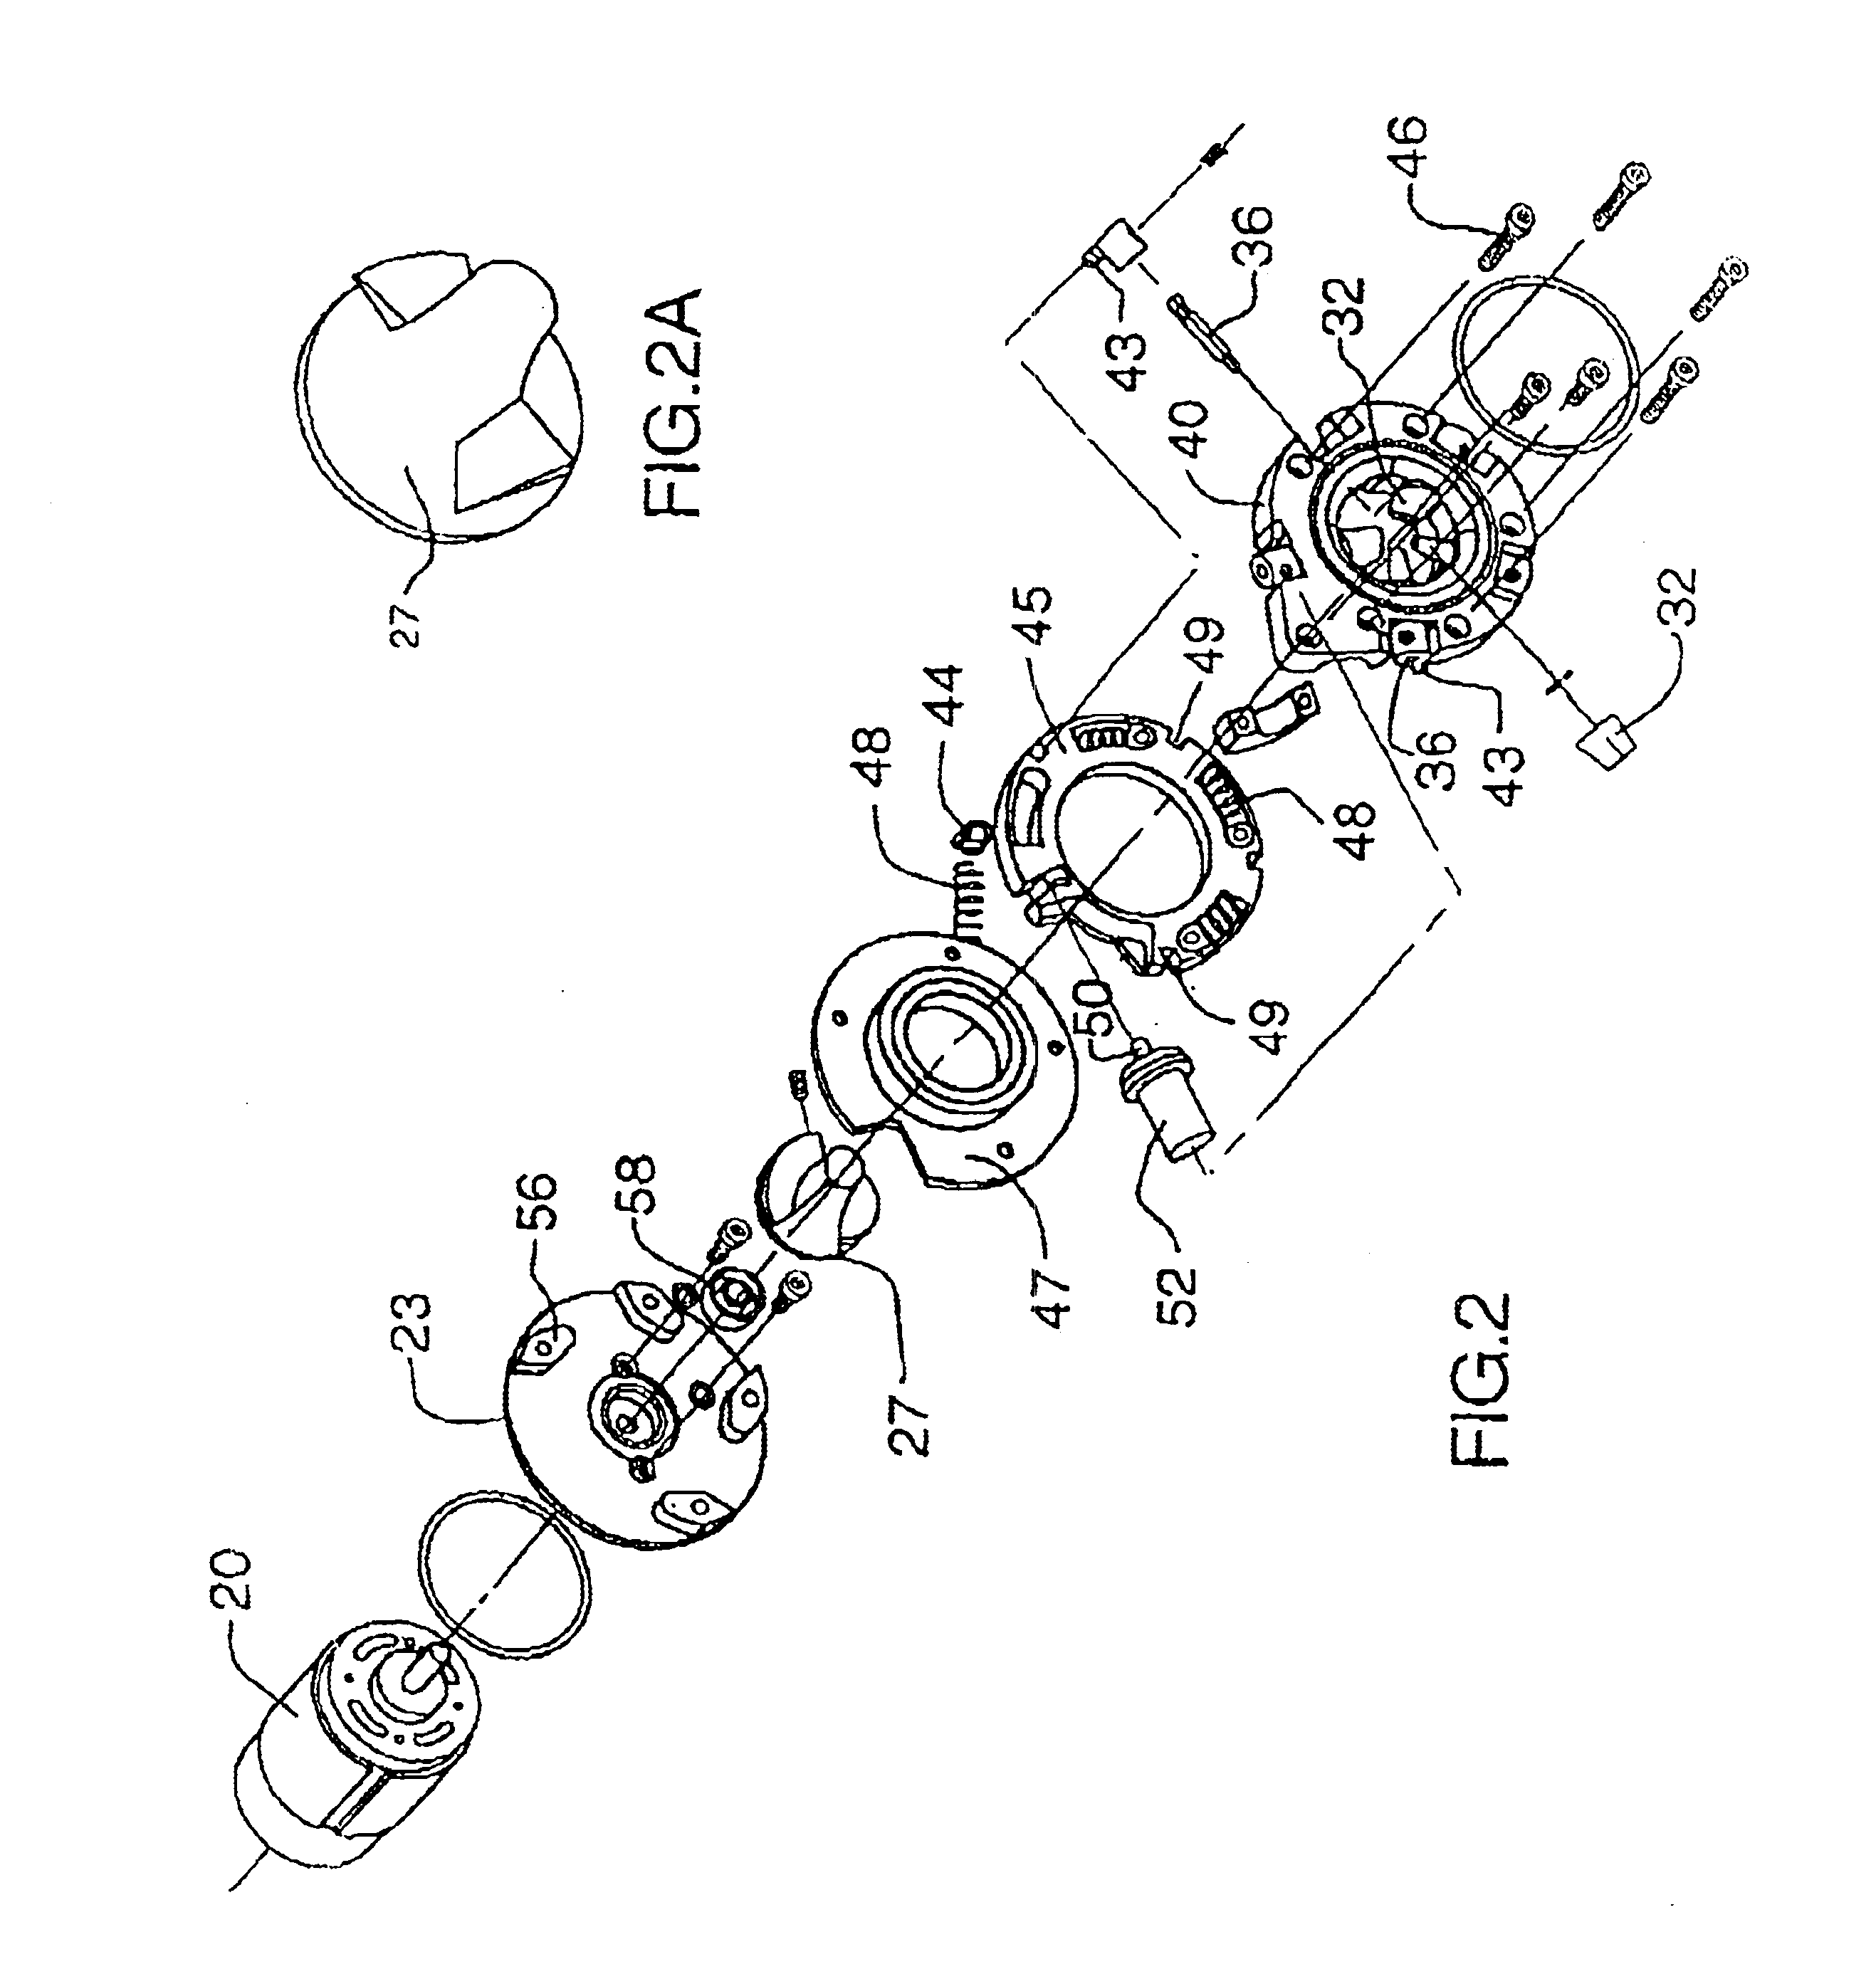 Coolant pump, mainly for automotive use